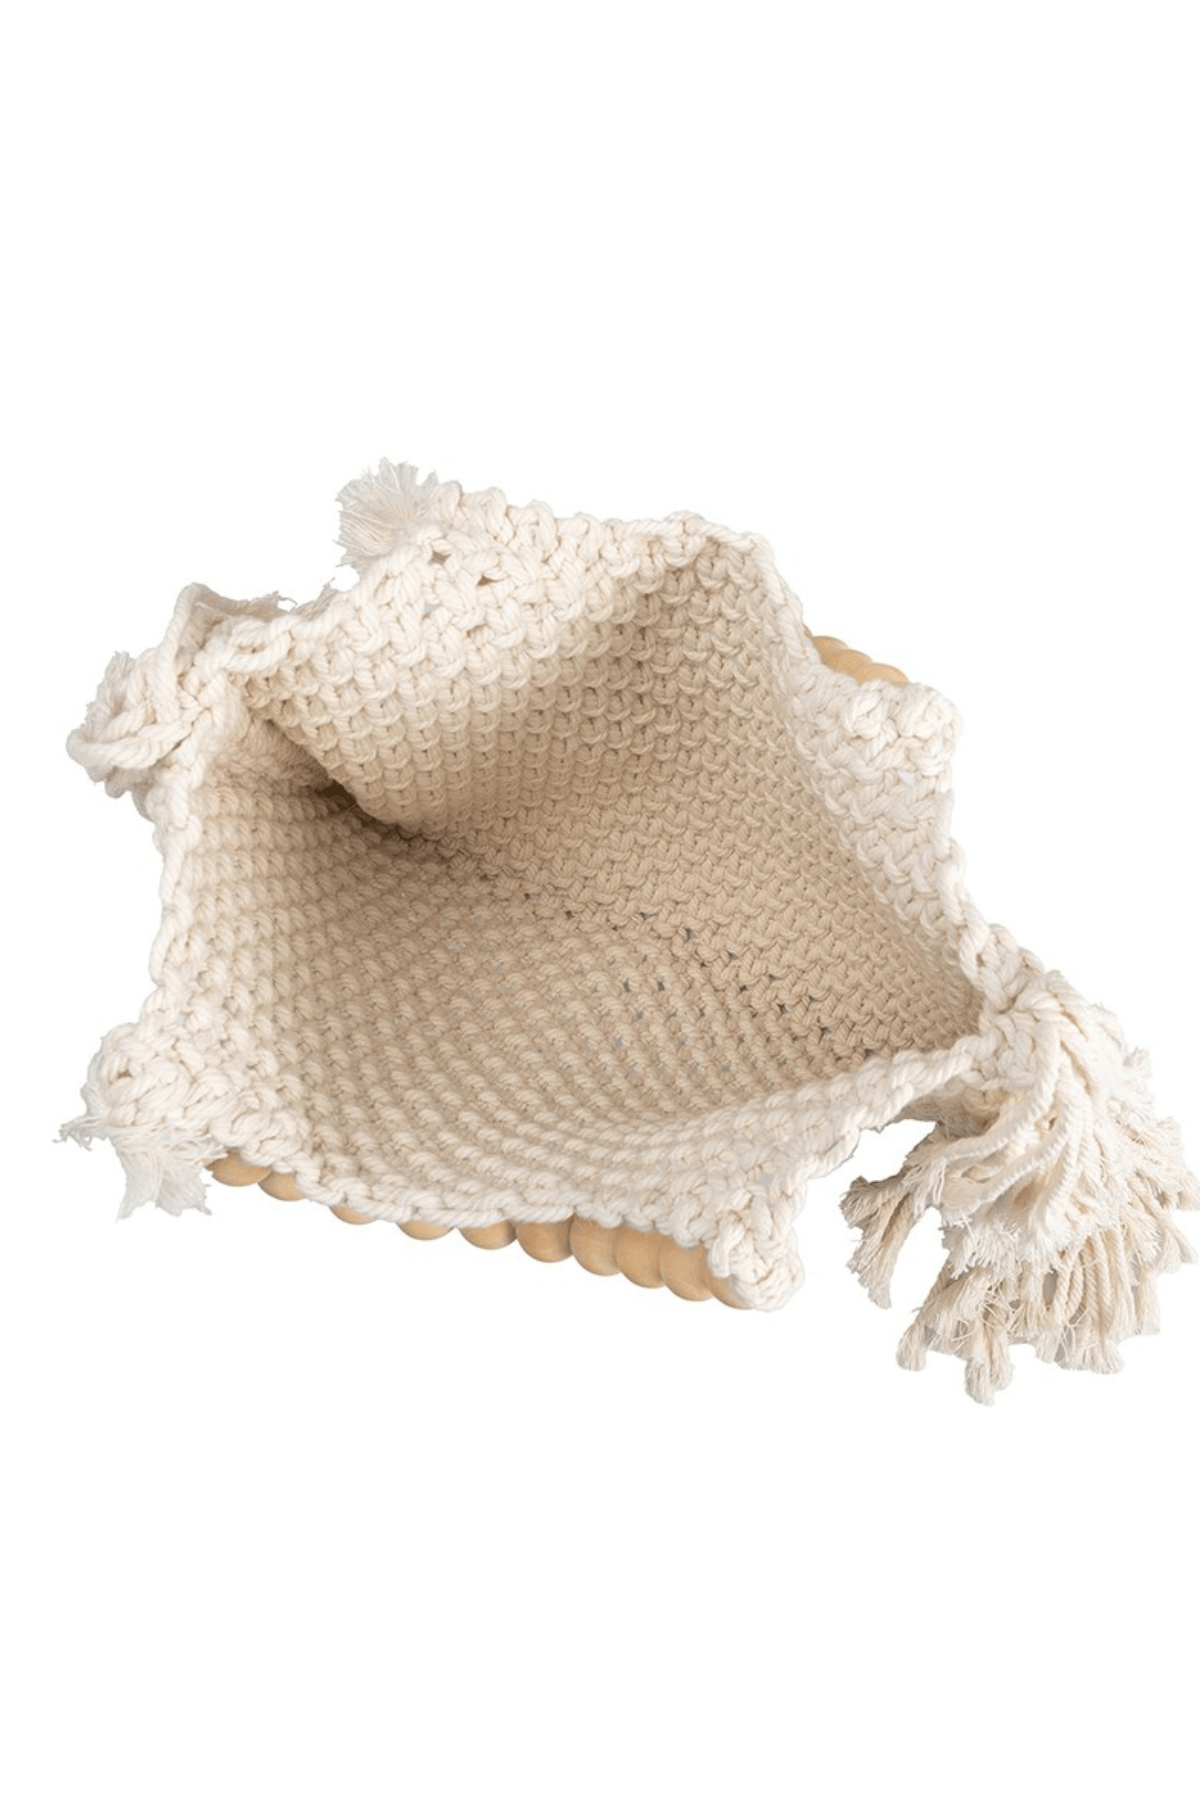 Melie Bianco Lithbet Crochet Fringe Beach Bag